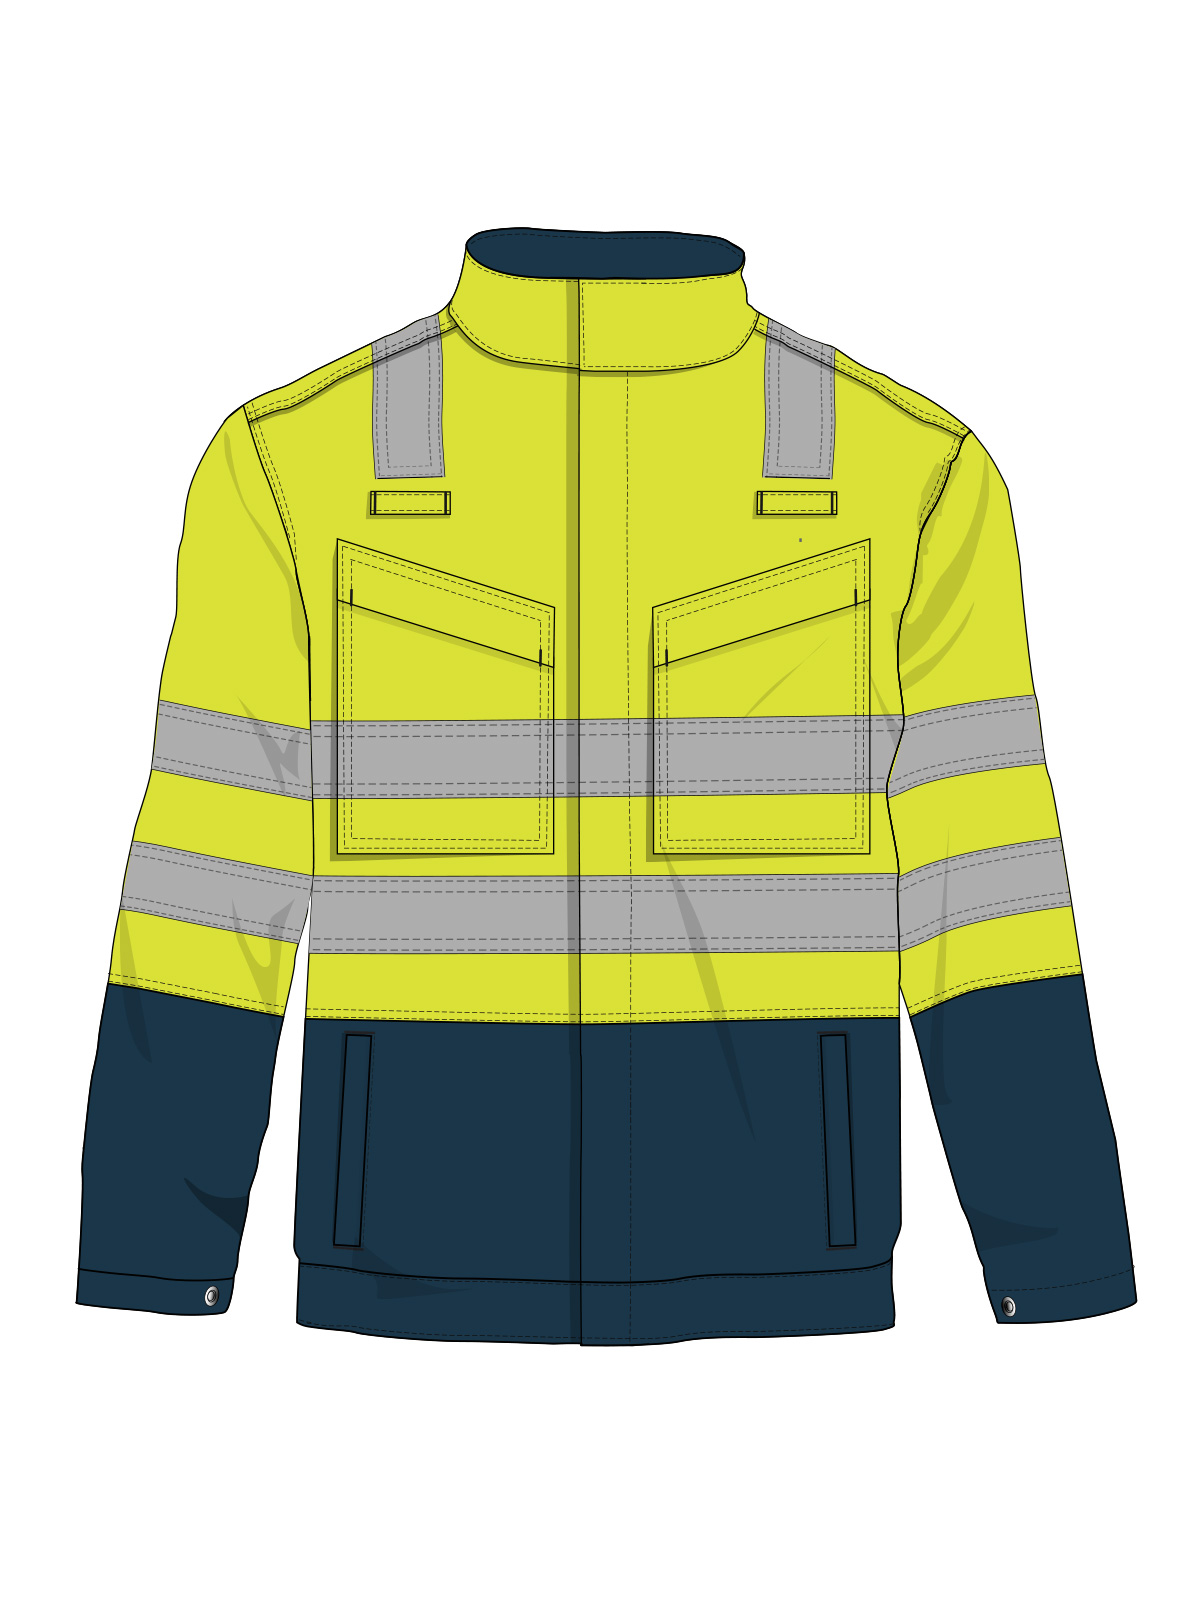 Multi Risk Fire Resistant Jacket